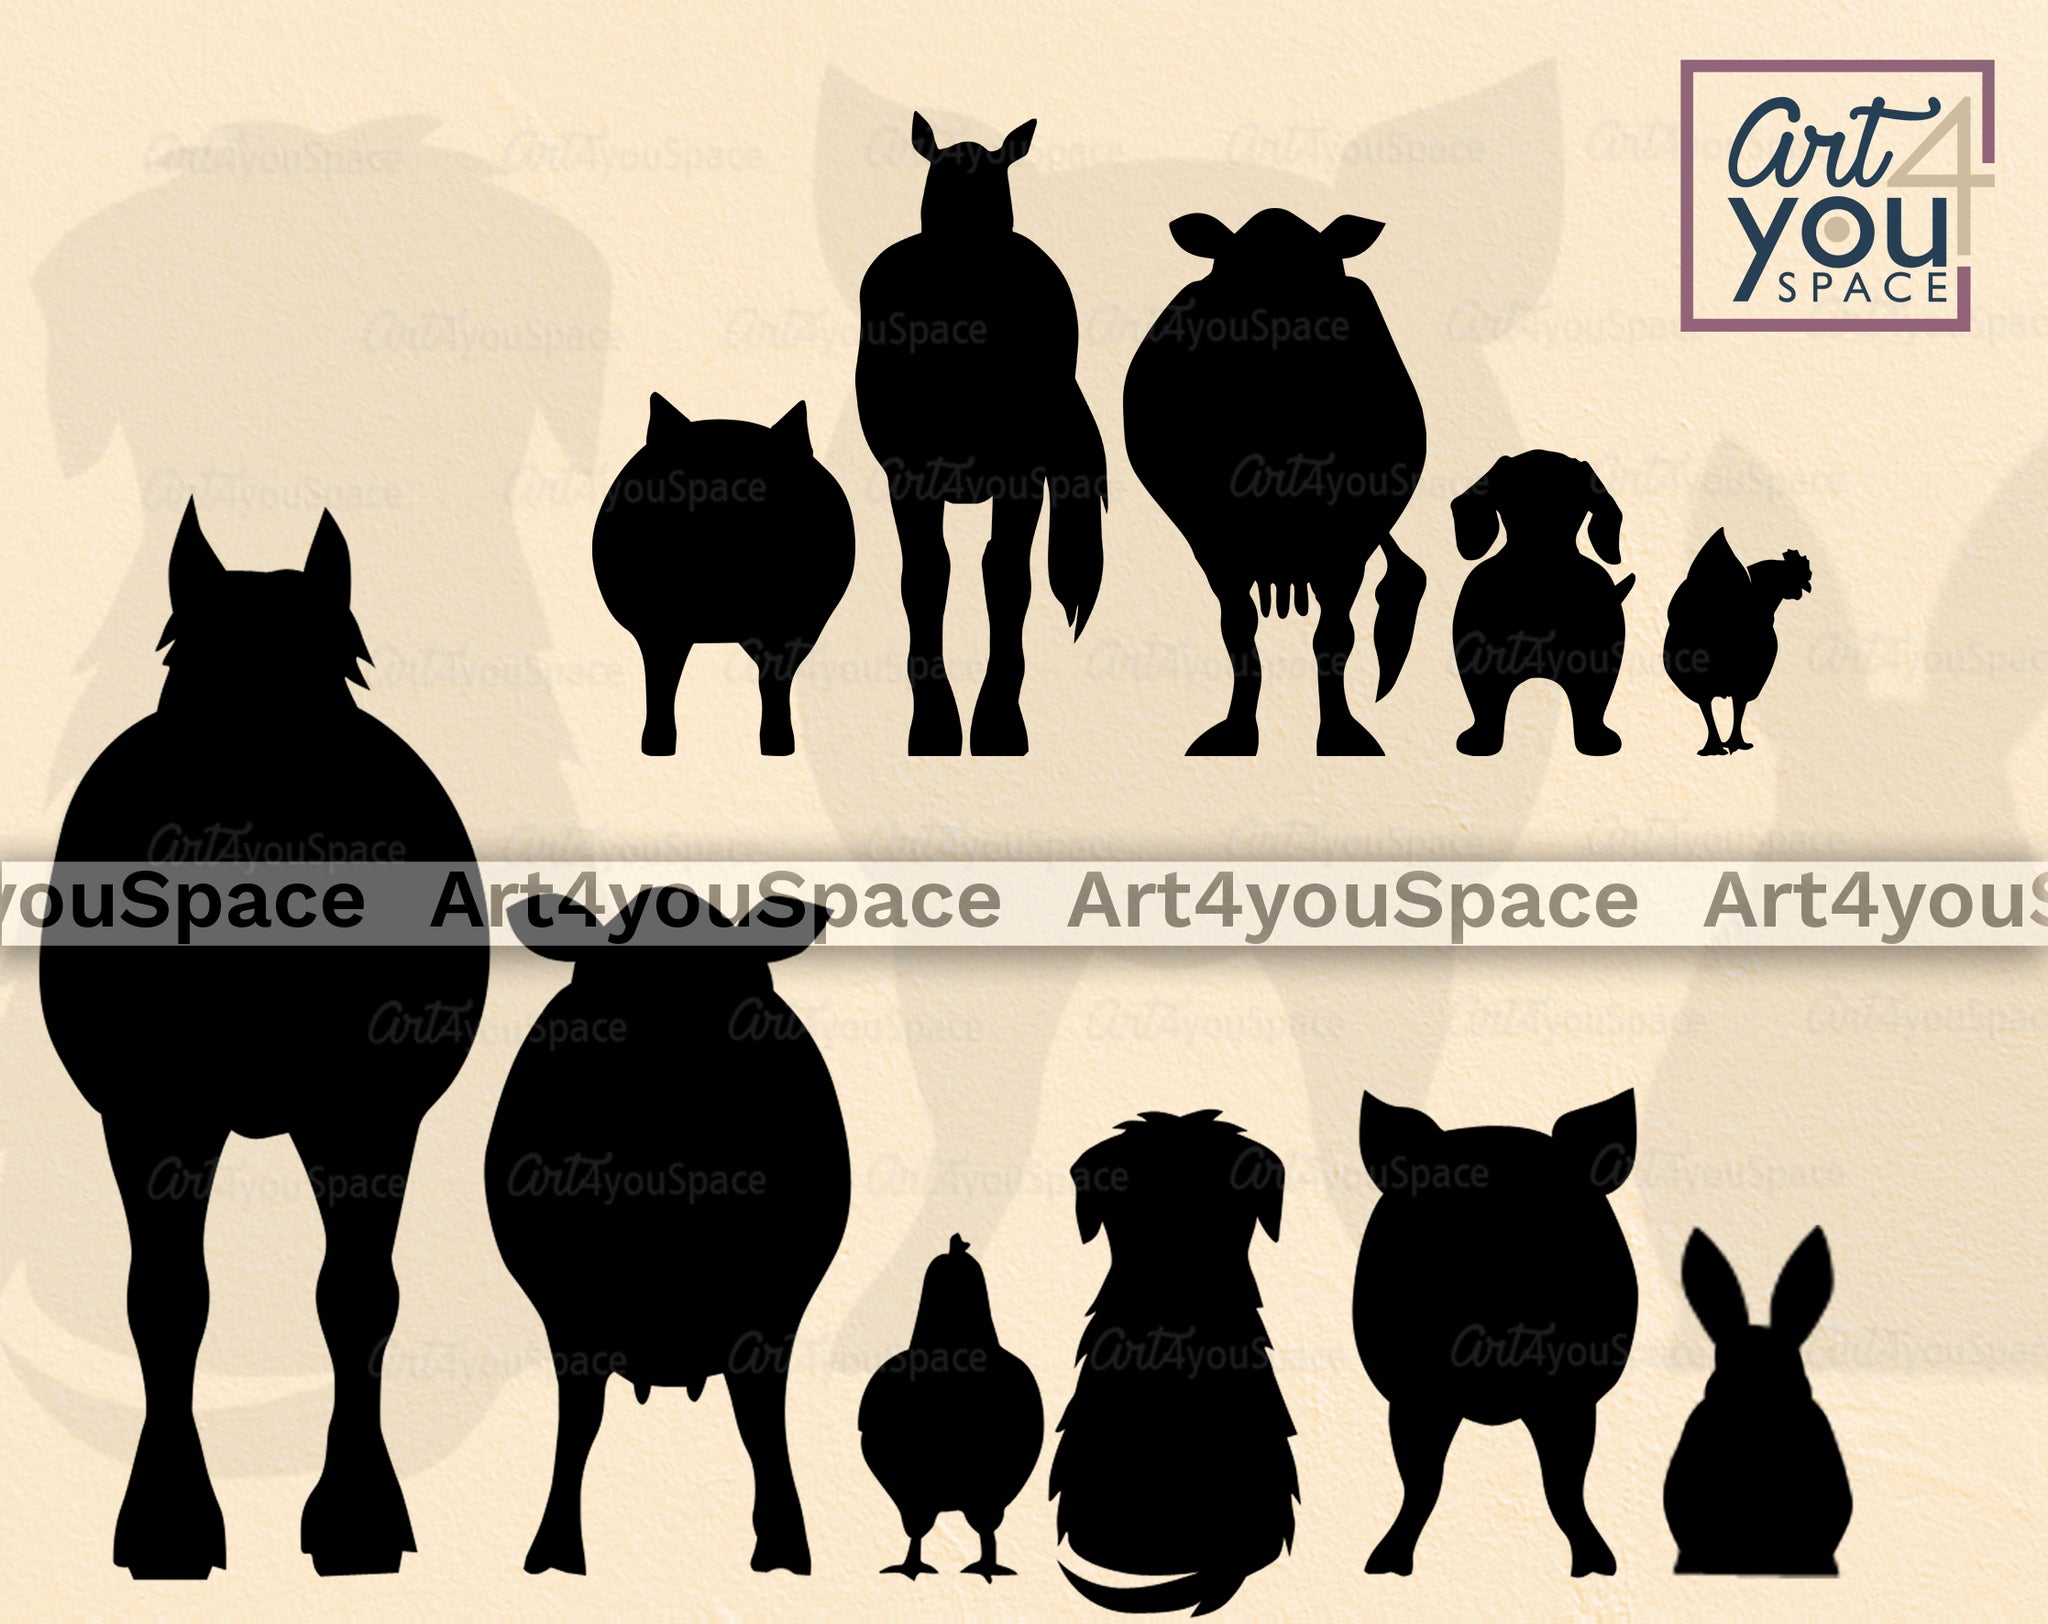 farm animal silhouettes